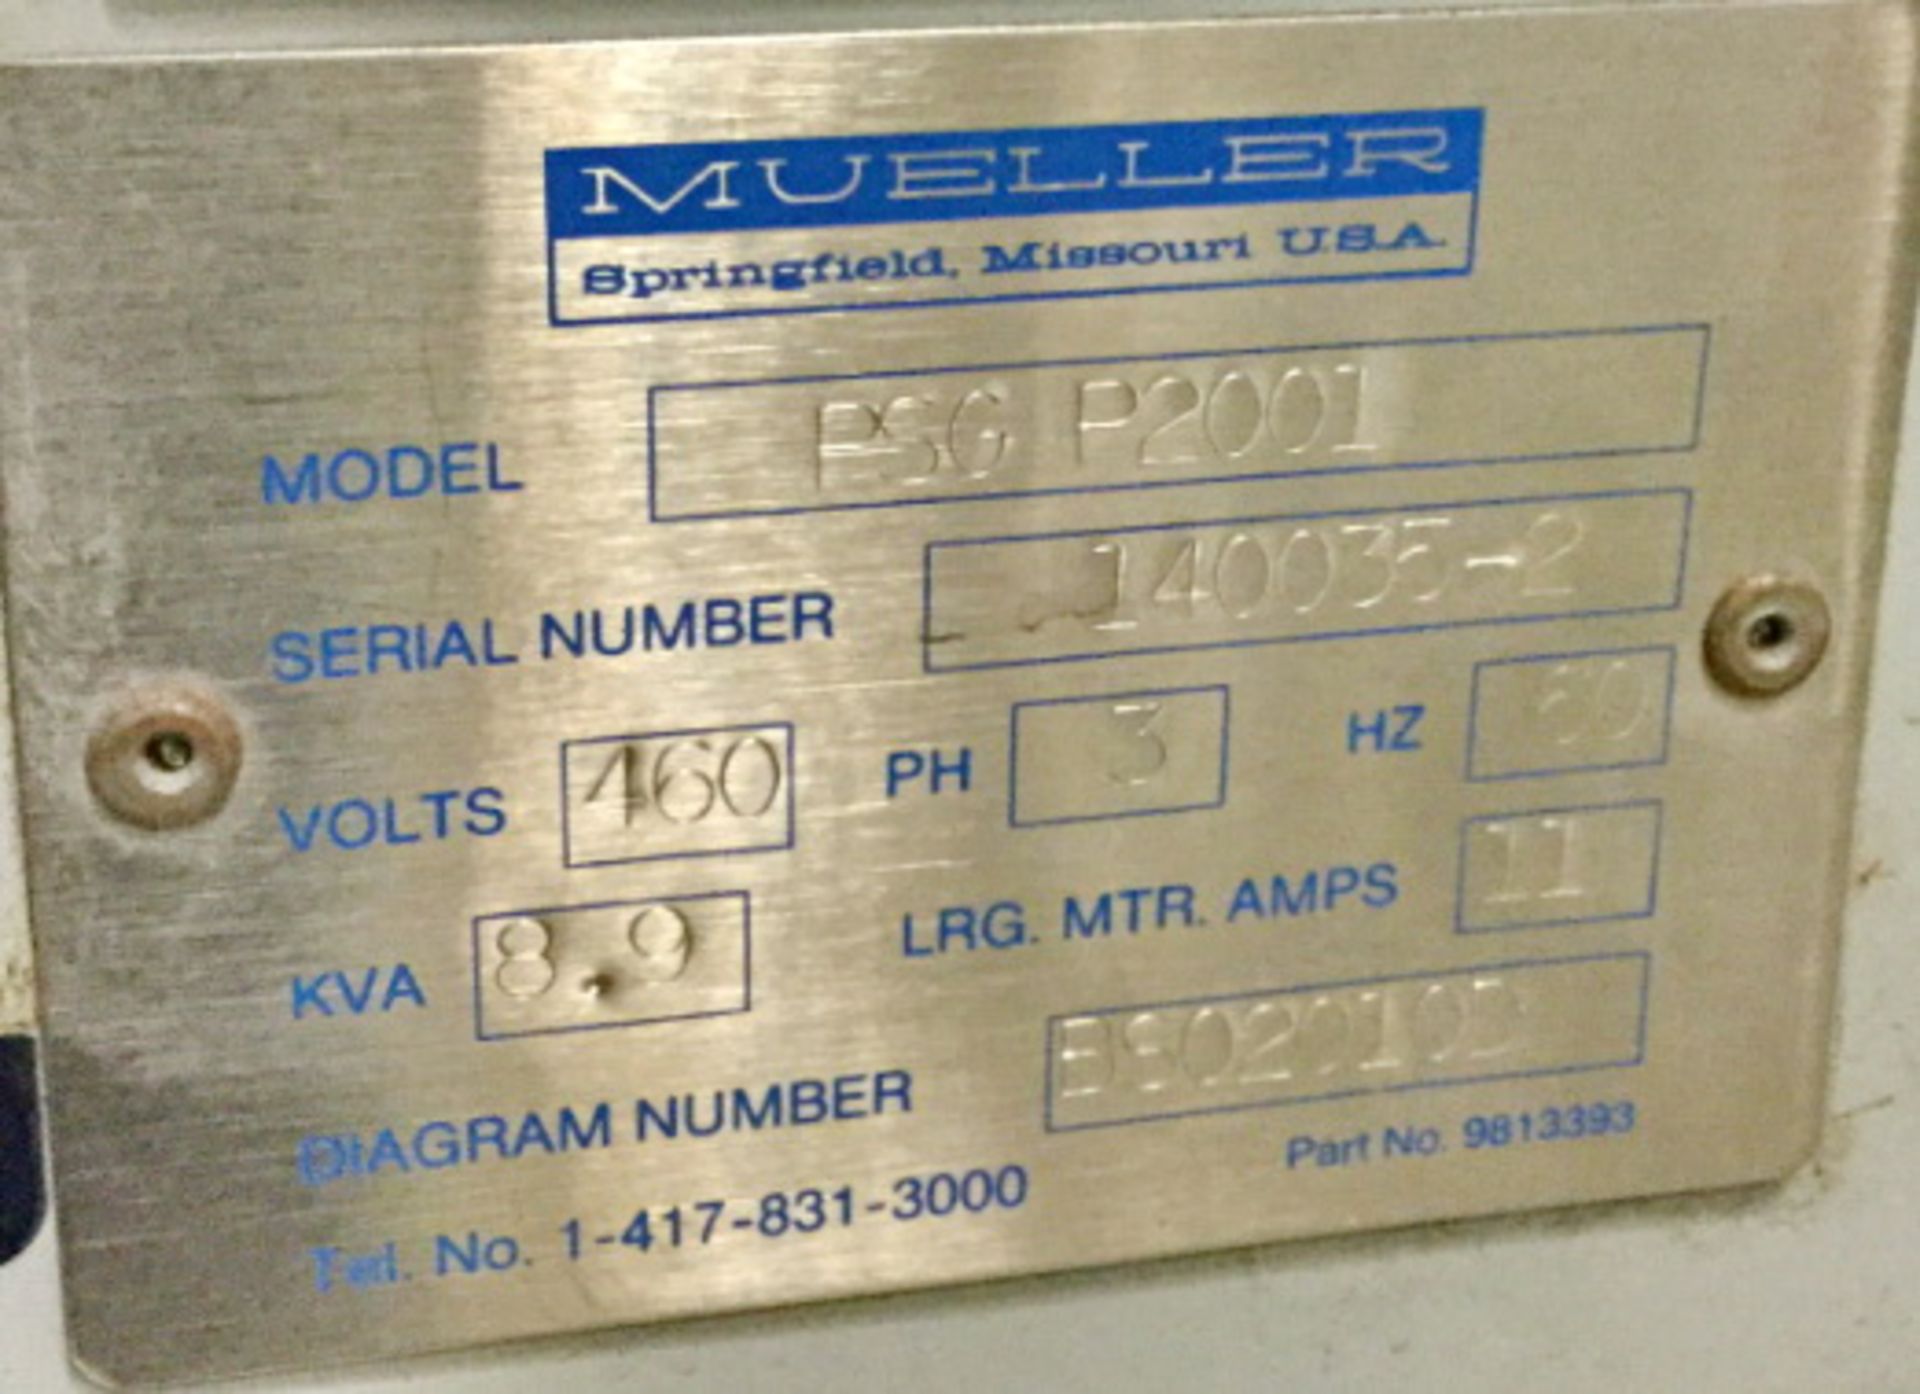 Mueller Biopharm Systems PuroPure Pure Steam Generator, Model PSG 2001, S/N 140035-2 - Image 2 of 6